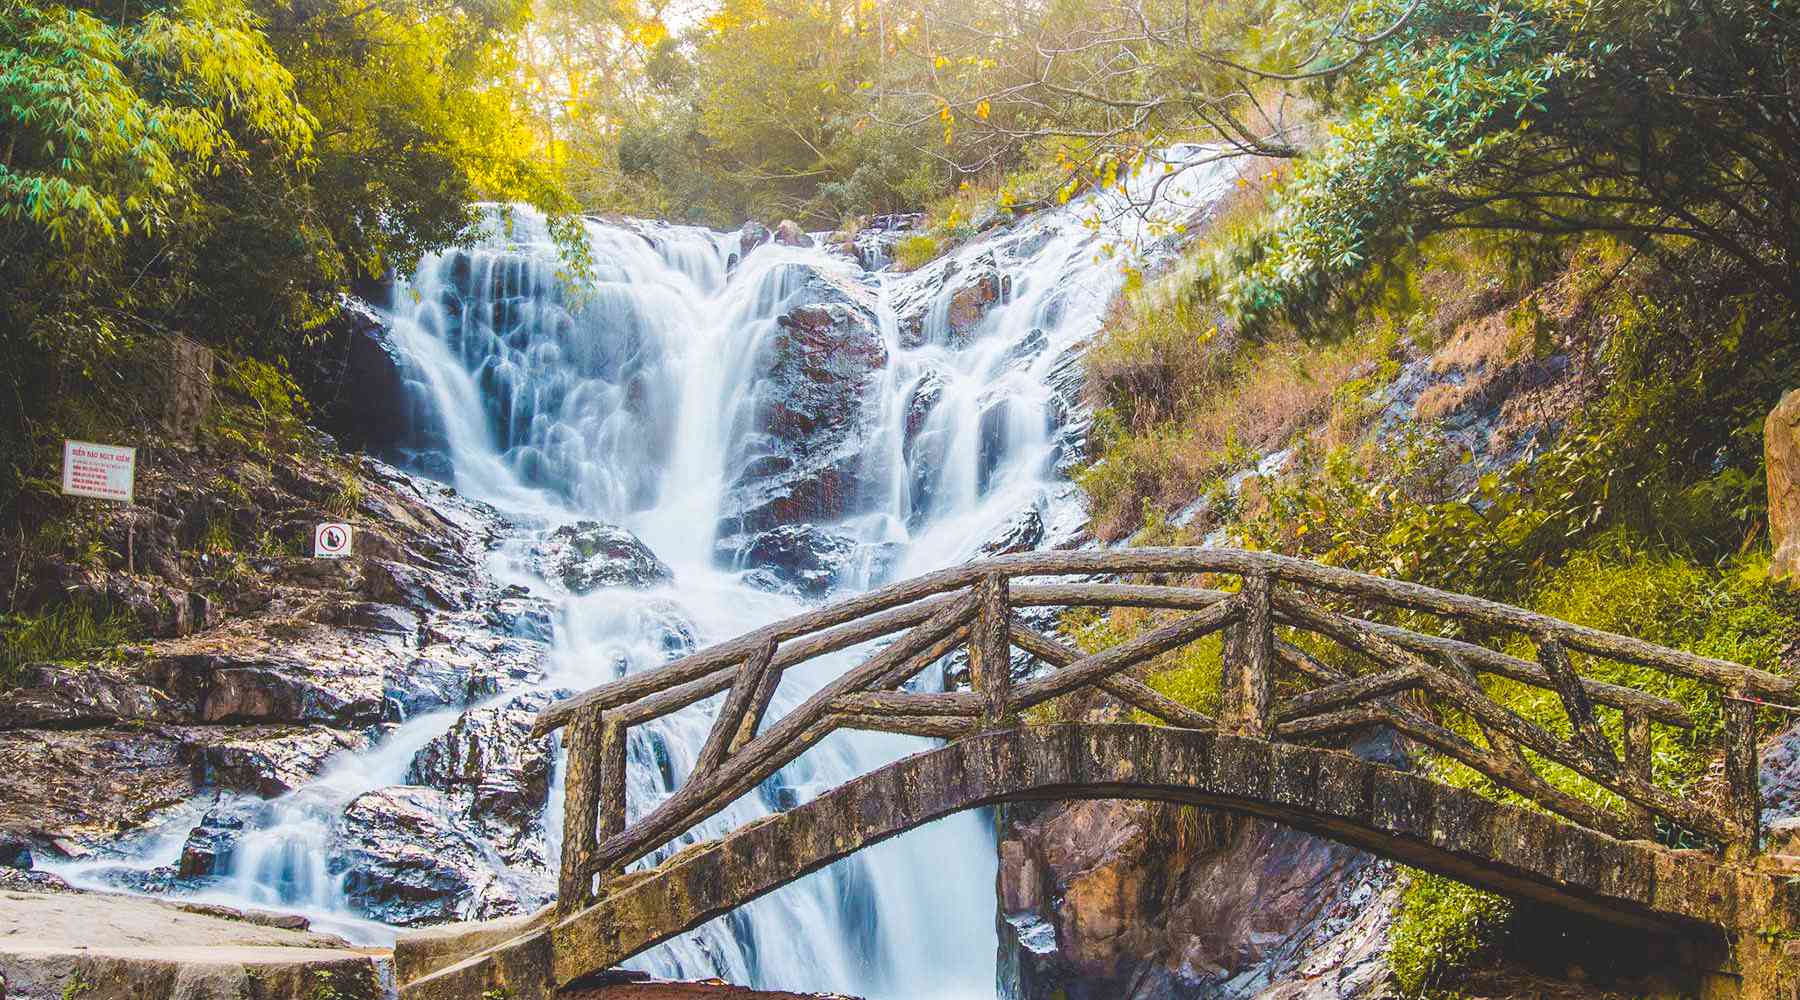 Vietnam waterfalls